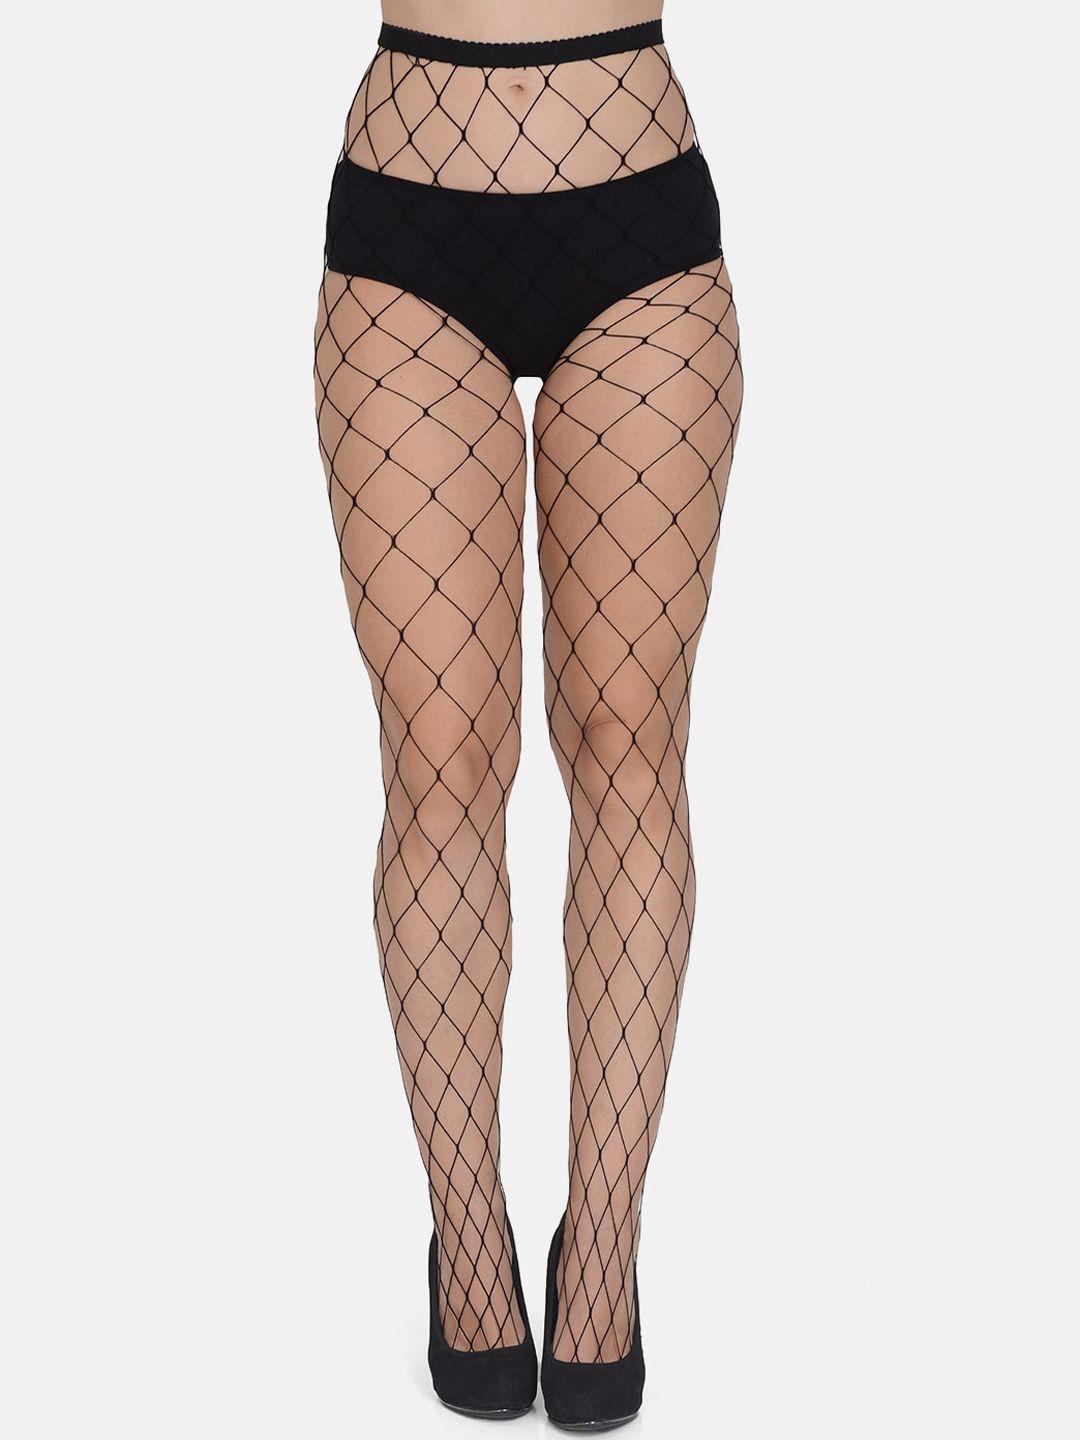 mod & shy women black fishnet design stockings